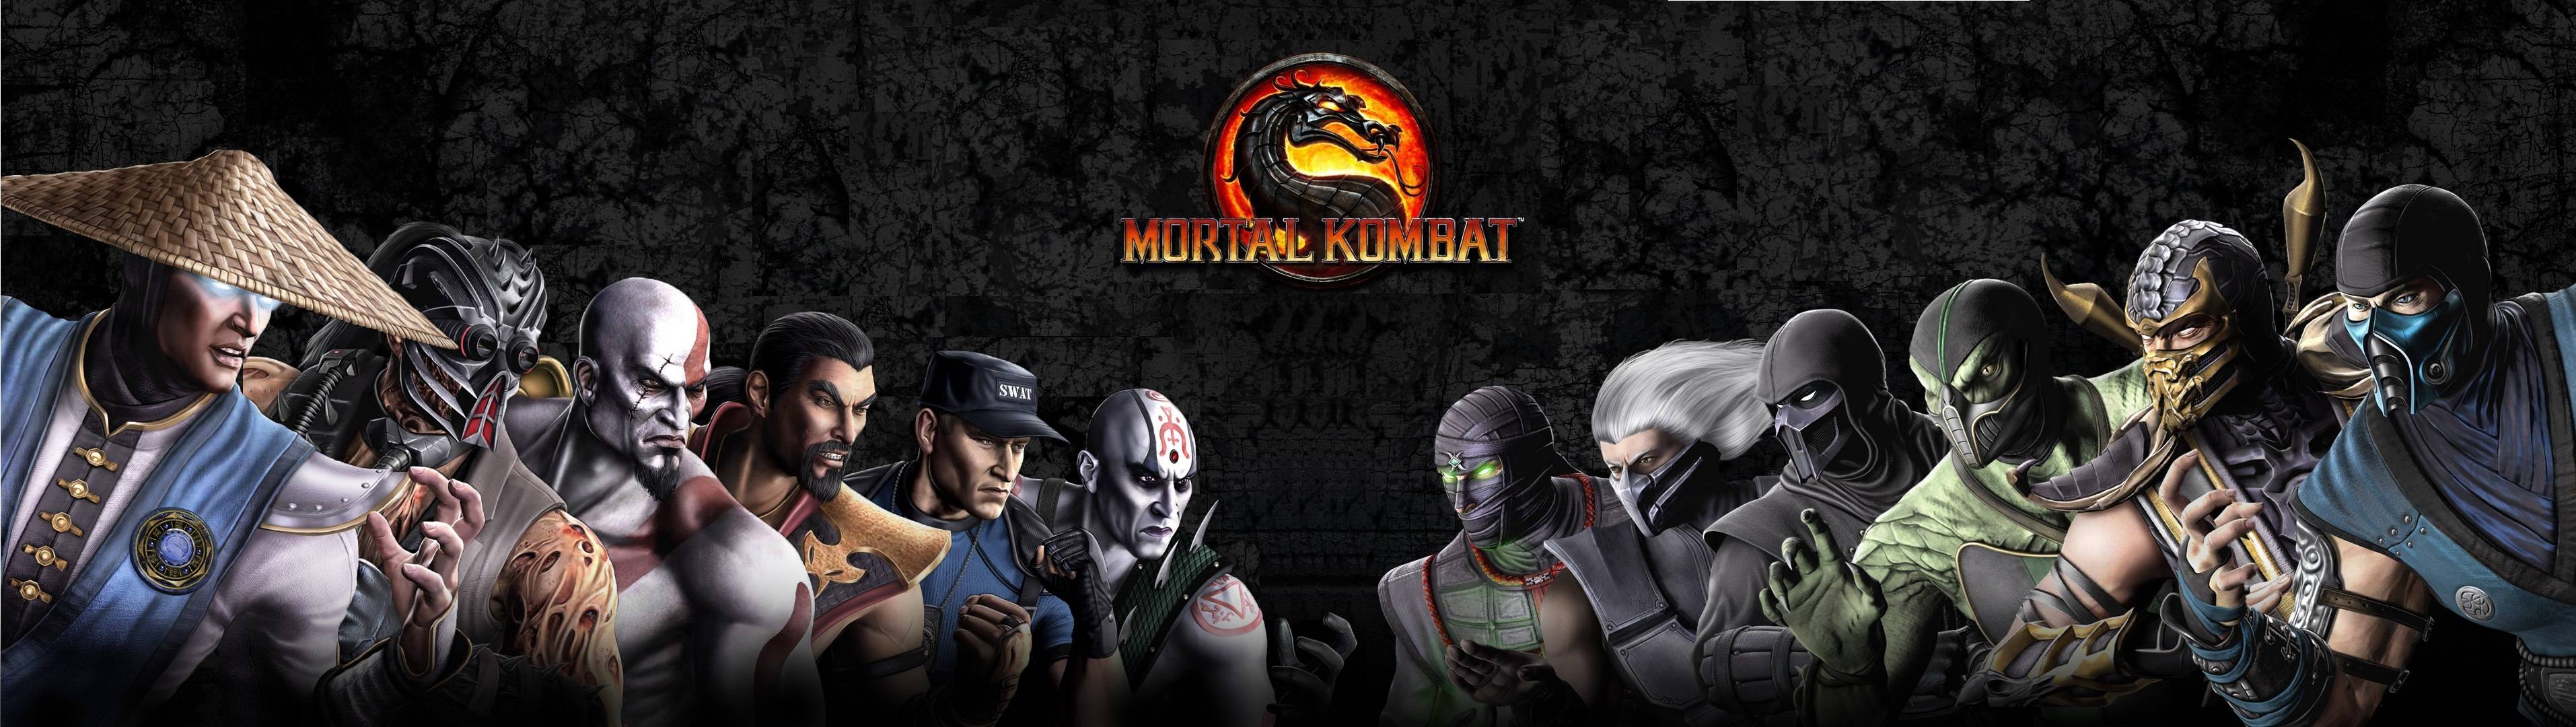 Pin Mortal Kombat Character Pros Picture